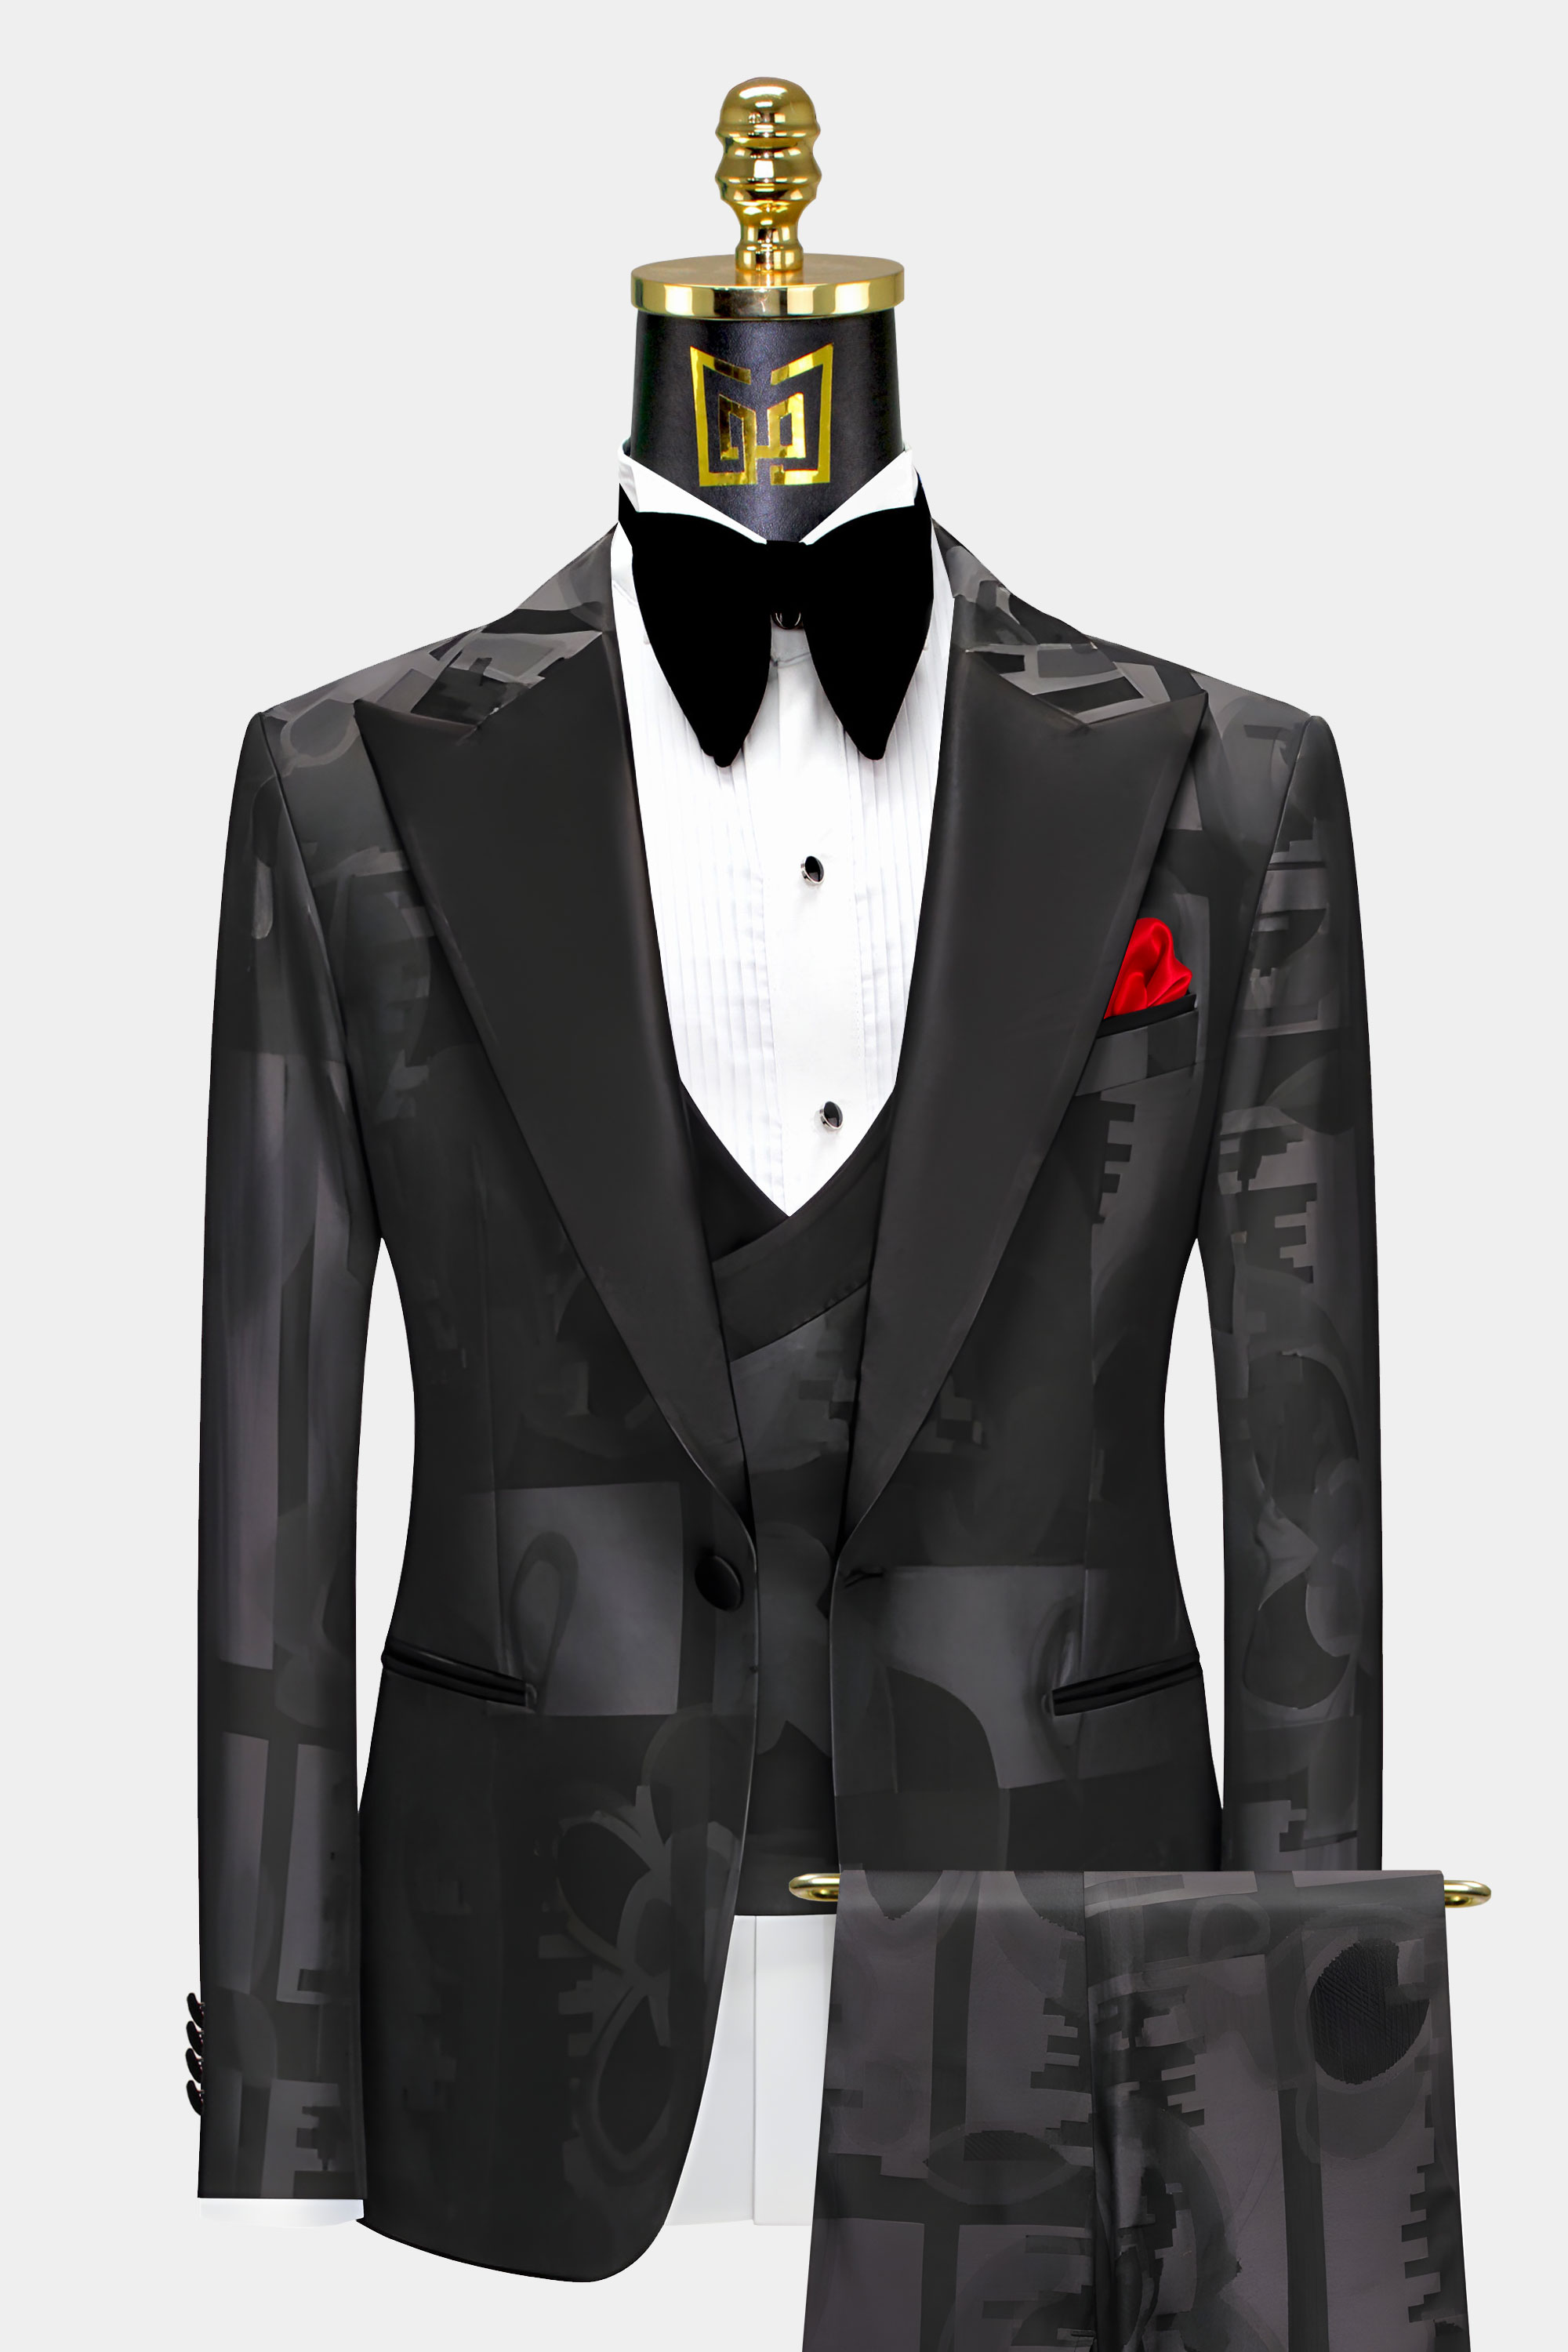 All-Black-Designer-Tuxedo-Suit-from-Gentlemansguru.com